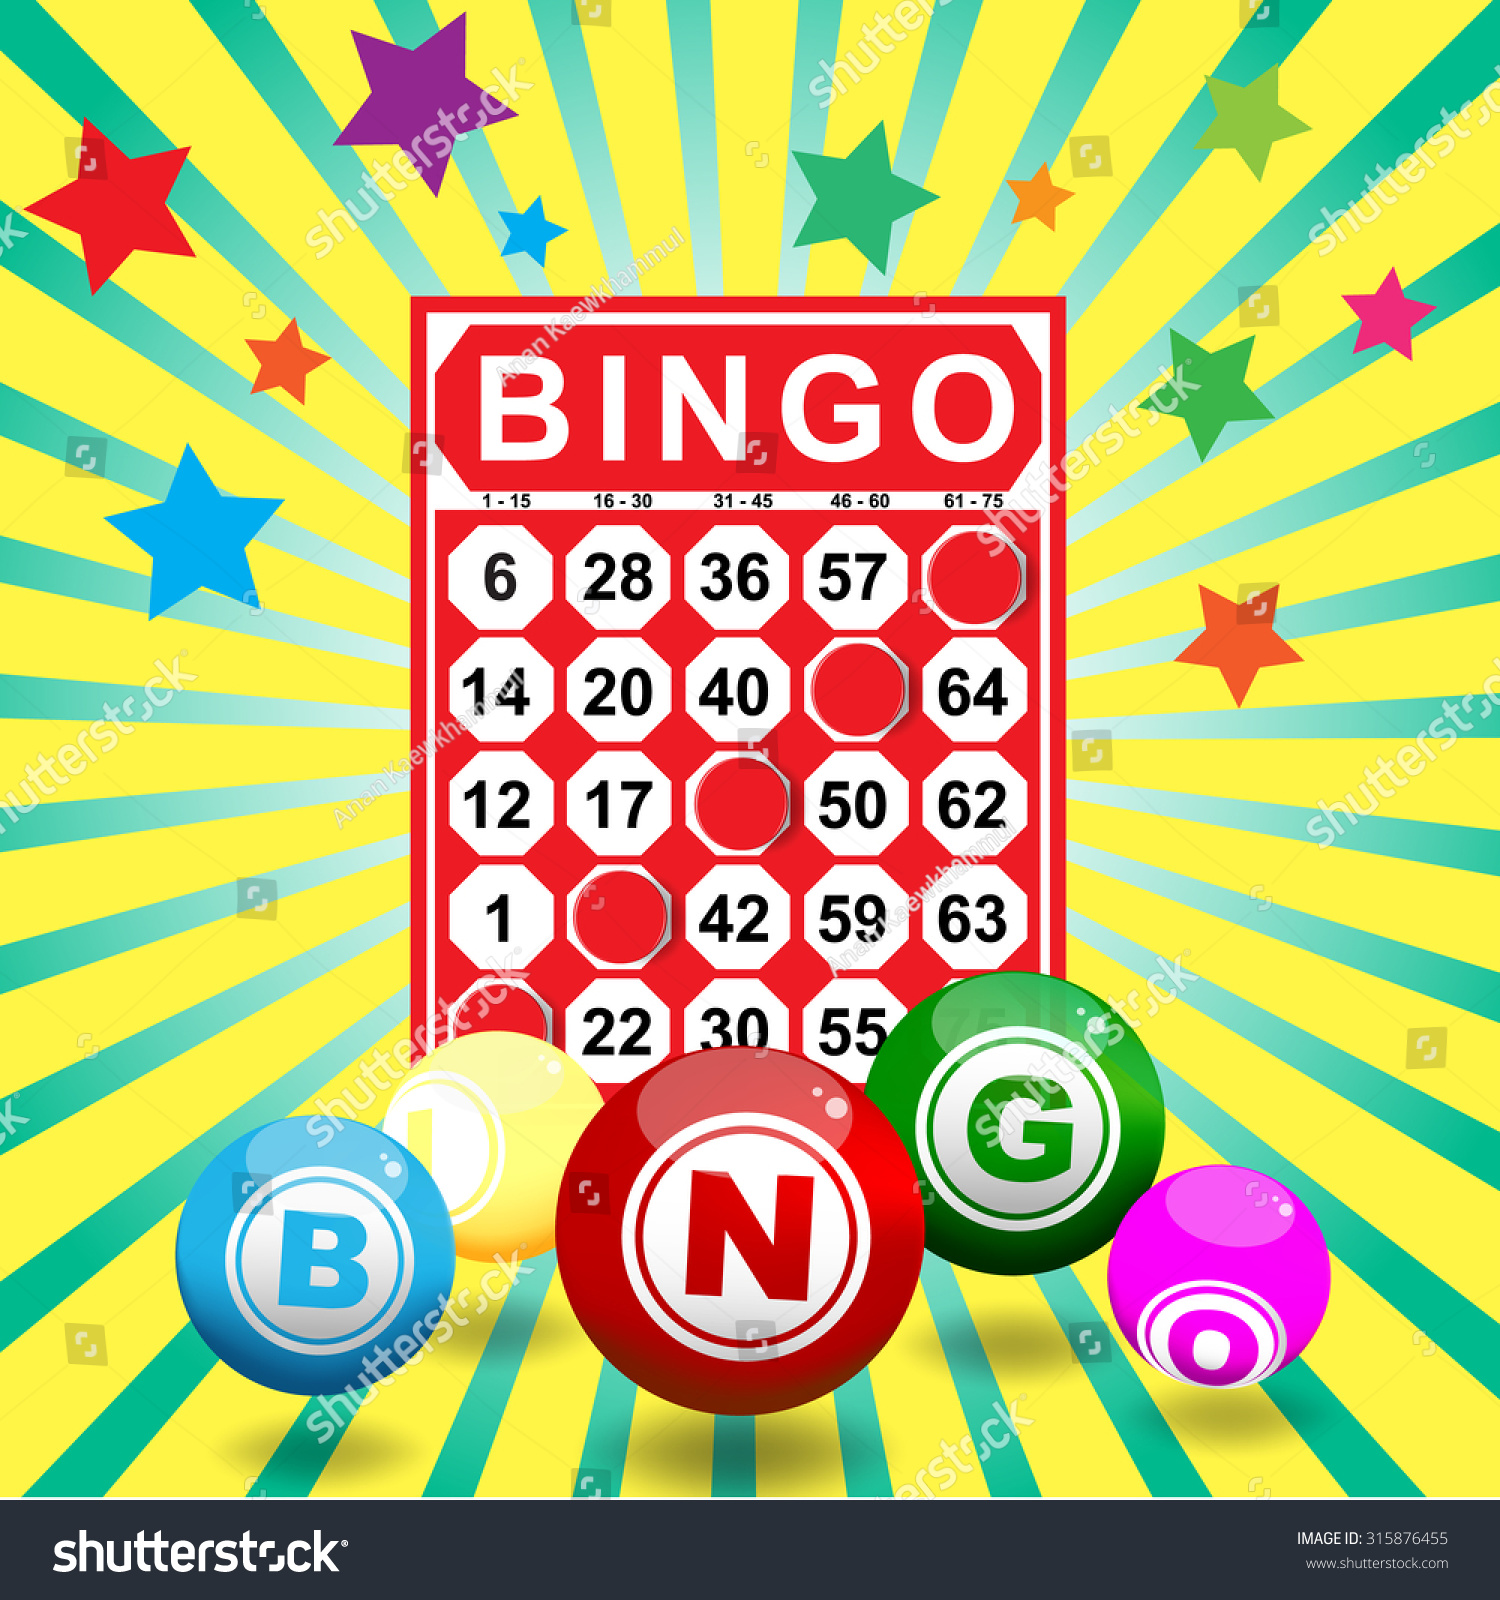 Illustration Of Bingo Card And Ball - 315876455 : Shutterstock